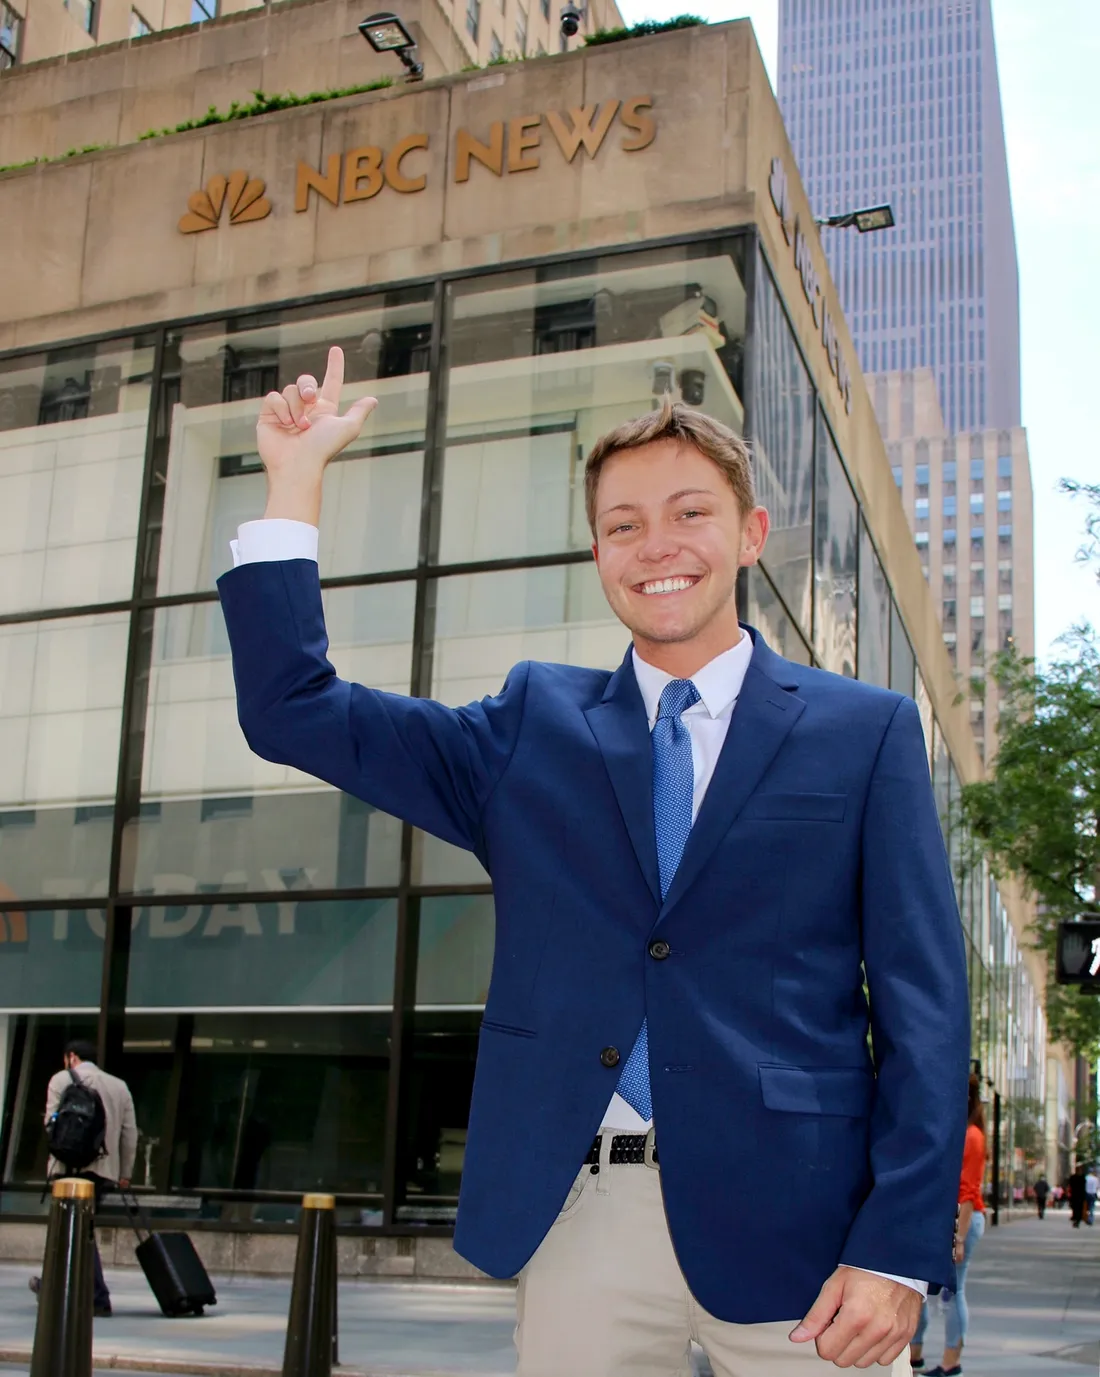 Daniel Wood outside of NBC News, smiling.